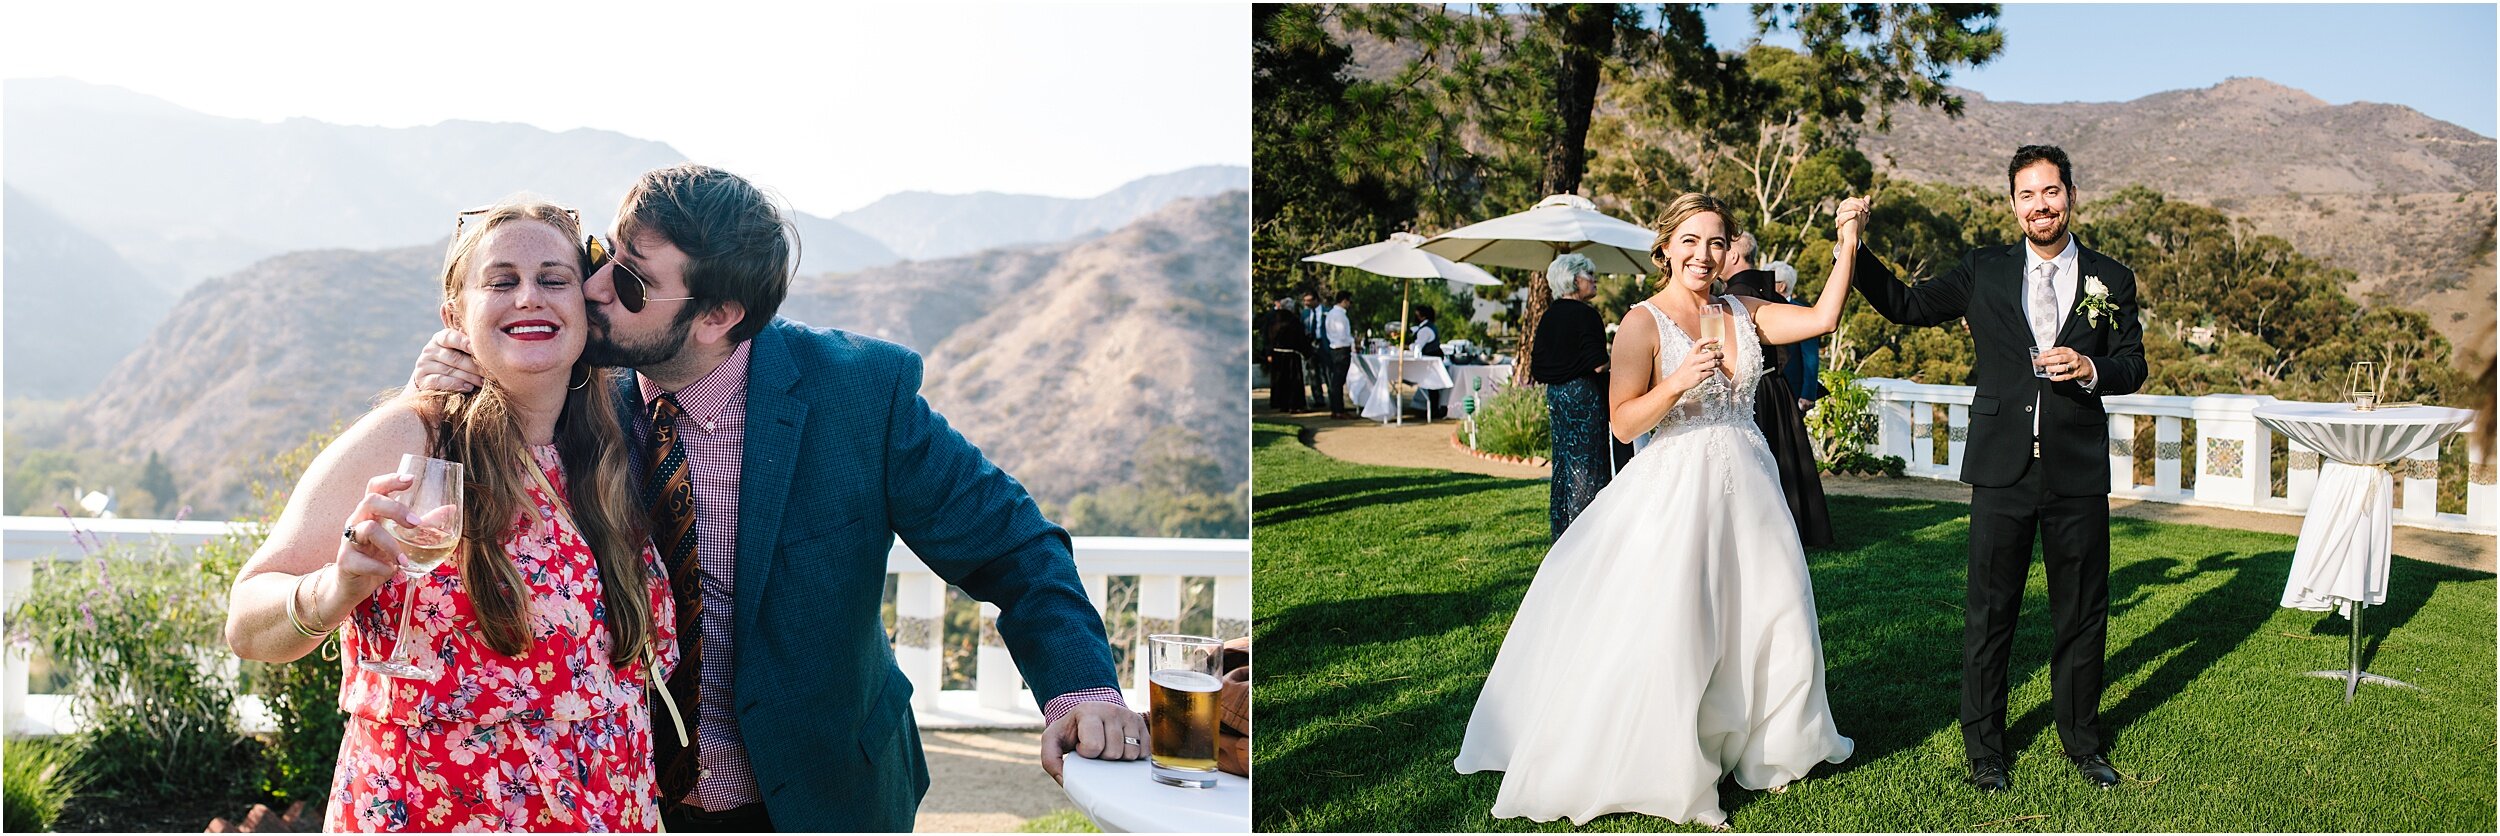 Caitlin and jason | Small Malibu Wedding | Malibu Elopement Photographer_0039.jpg